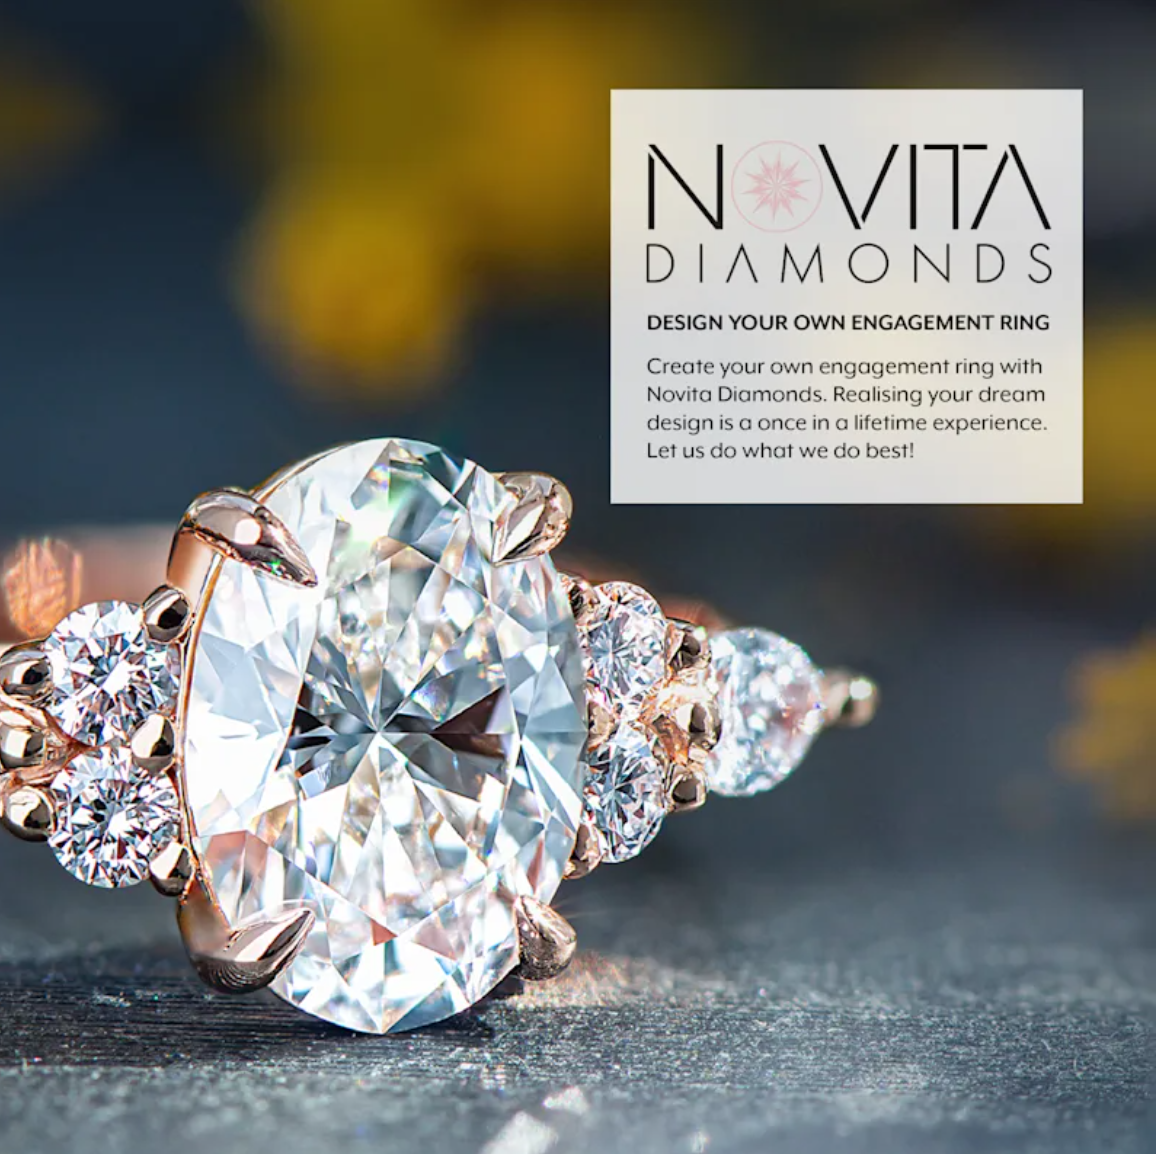 NOVITA Diamonds at the forefront of bespoke engagement rings in the UK market